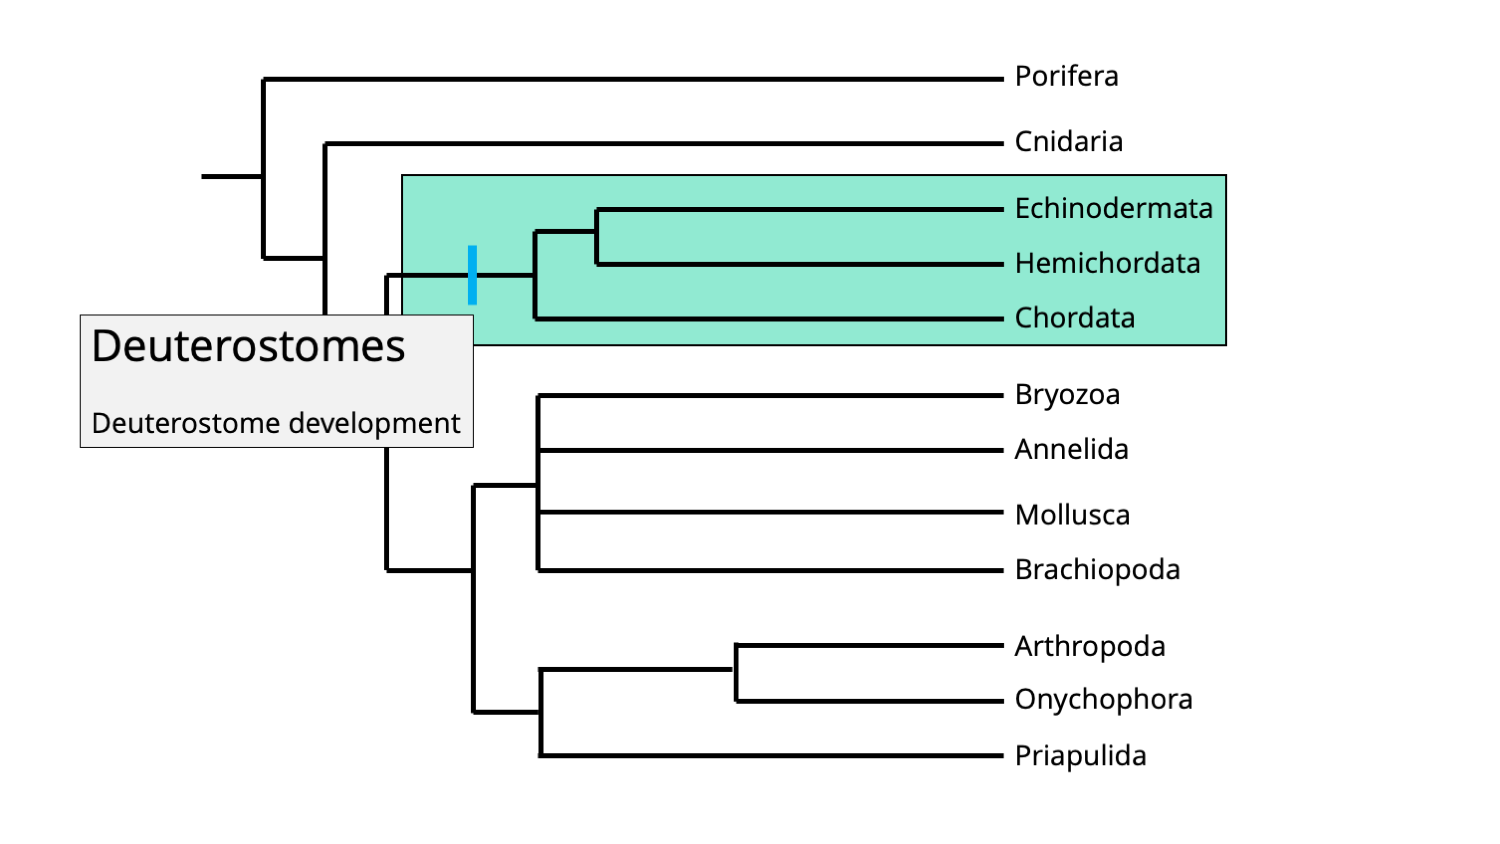 Image of animal phylogeny, highlighting the deuterostomes